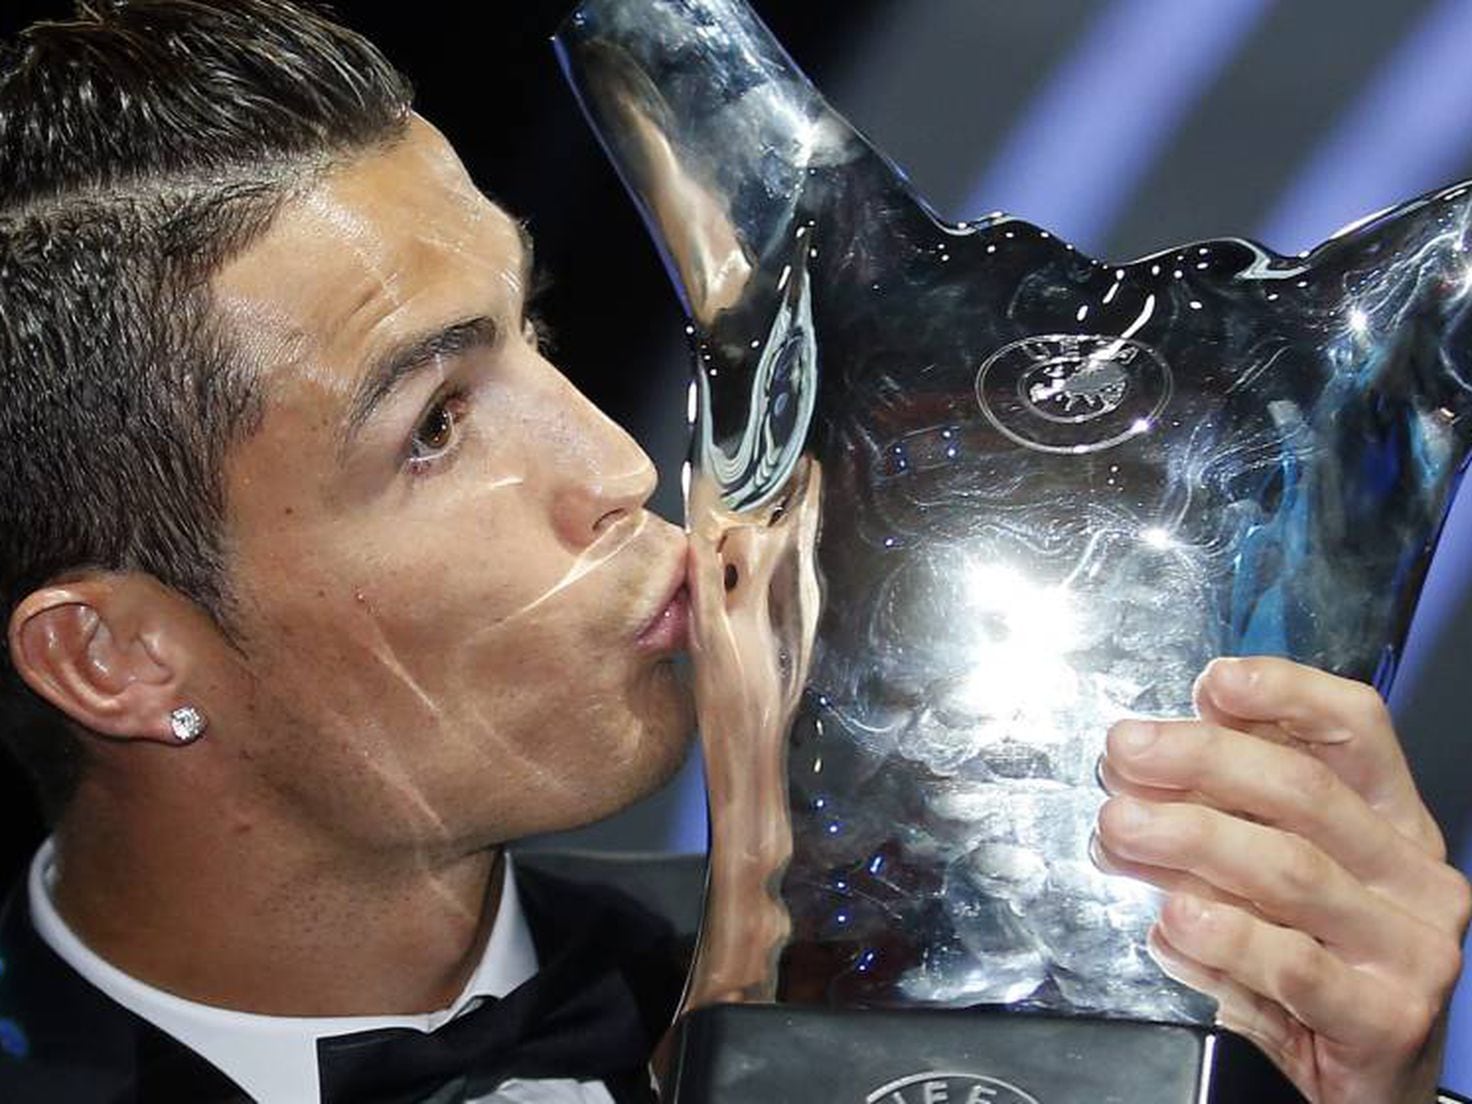 Cristiano Ronaldo named Best Player in Europe, Inside UEFA